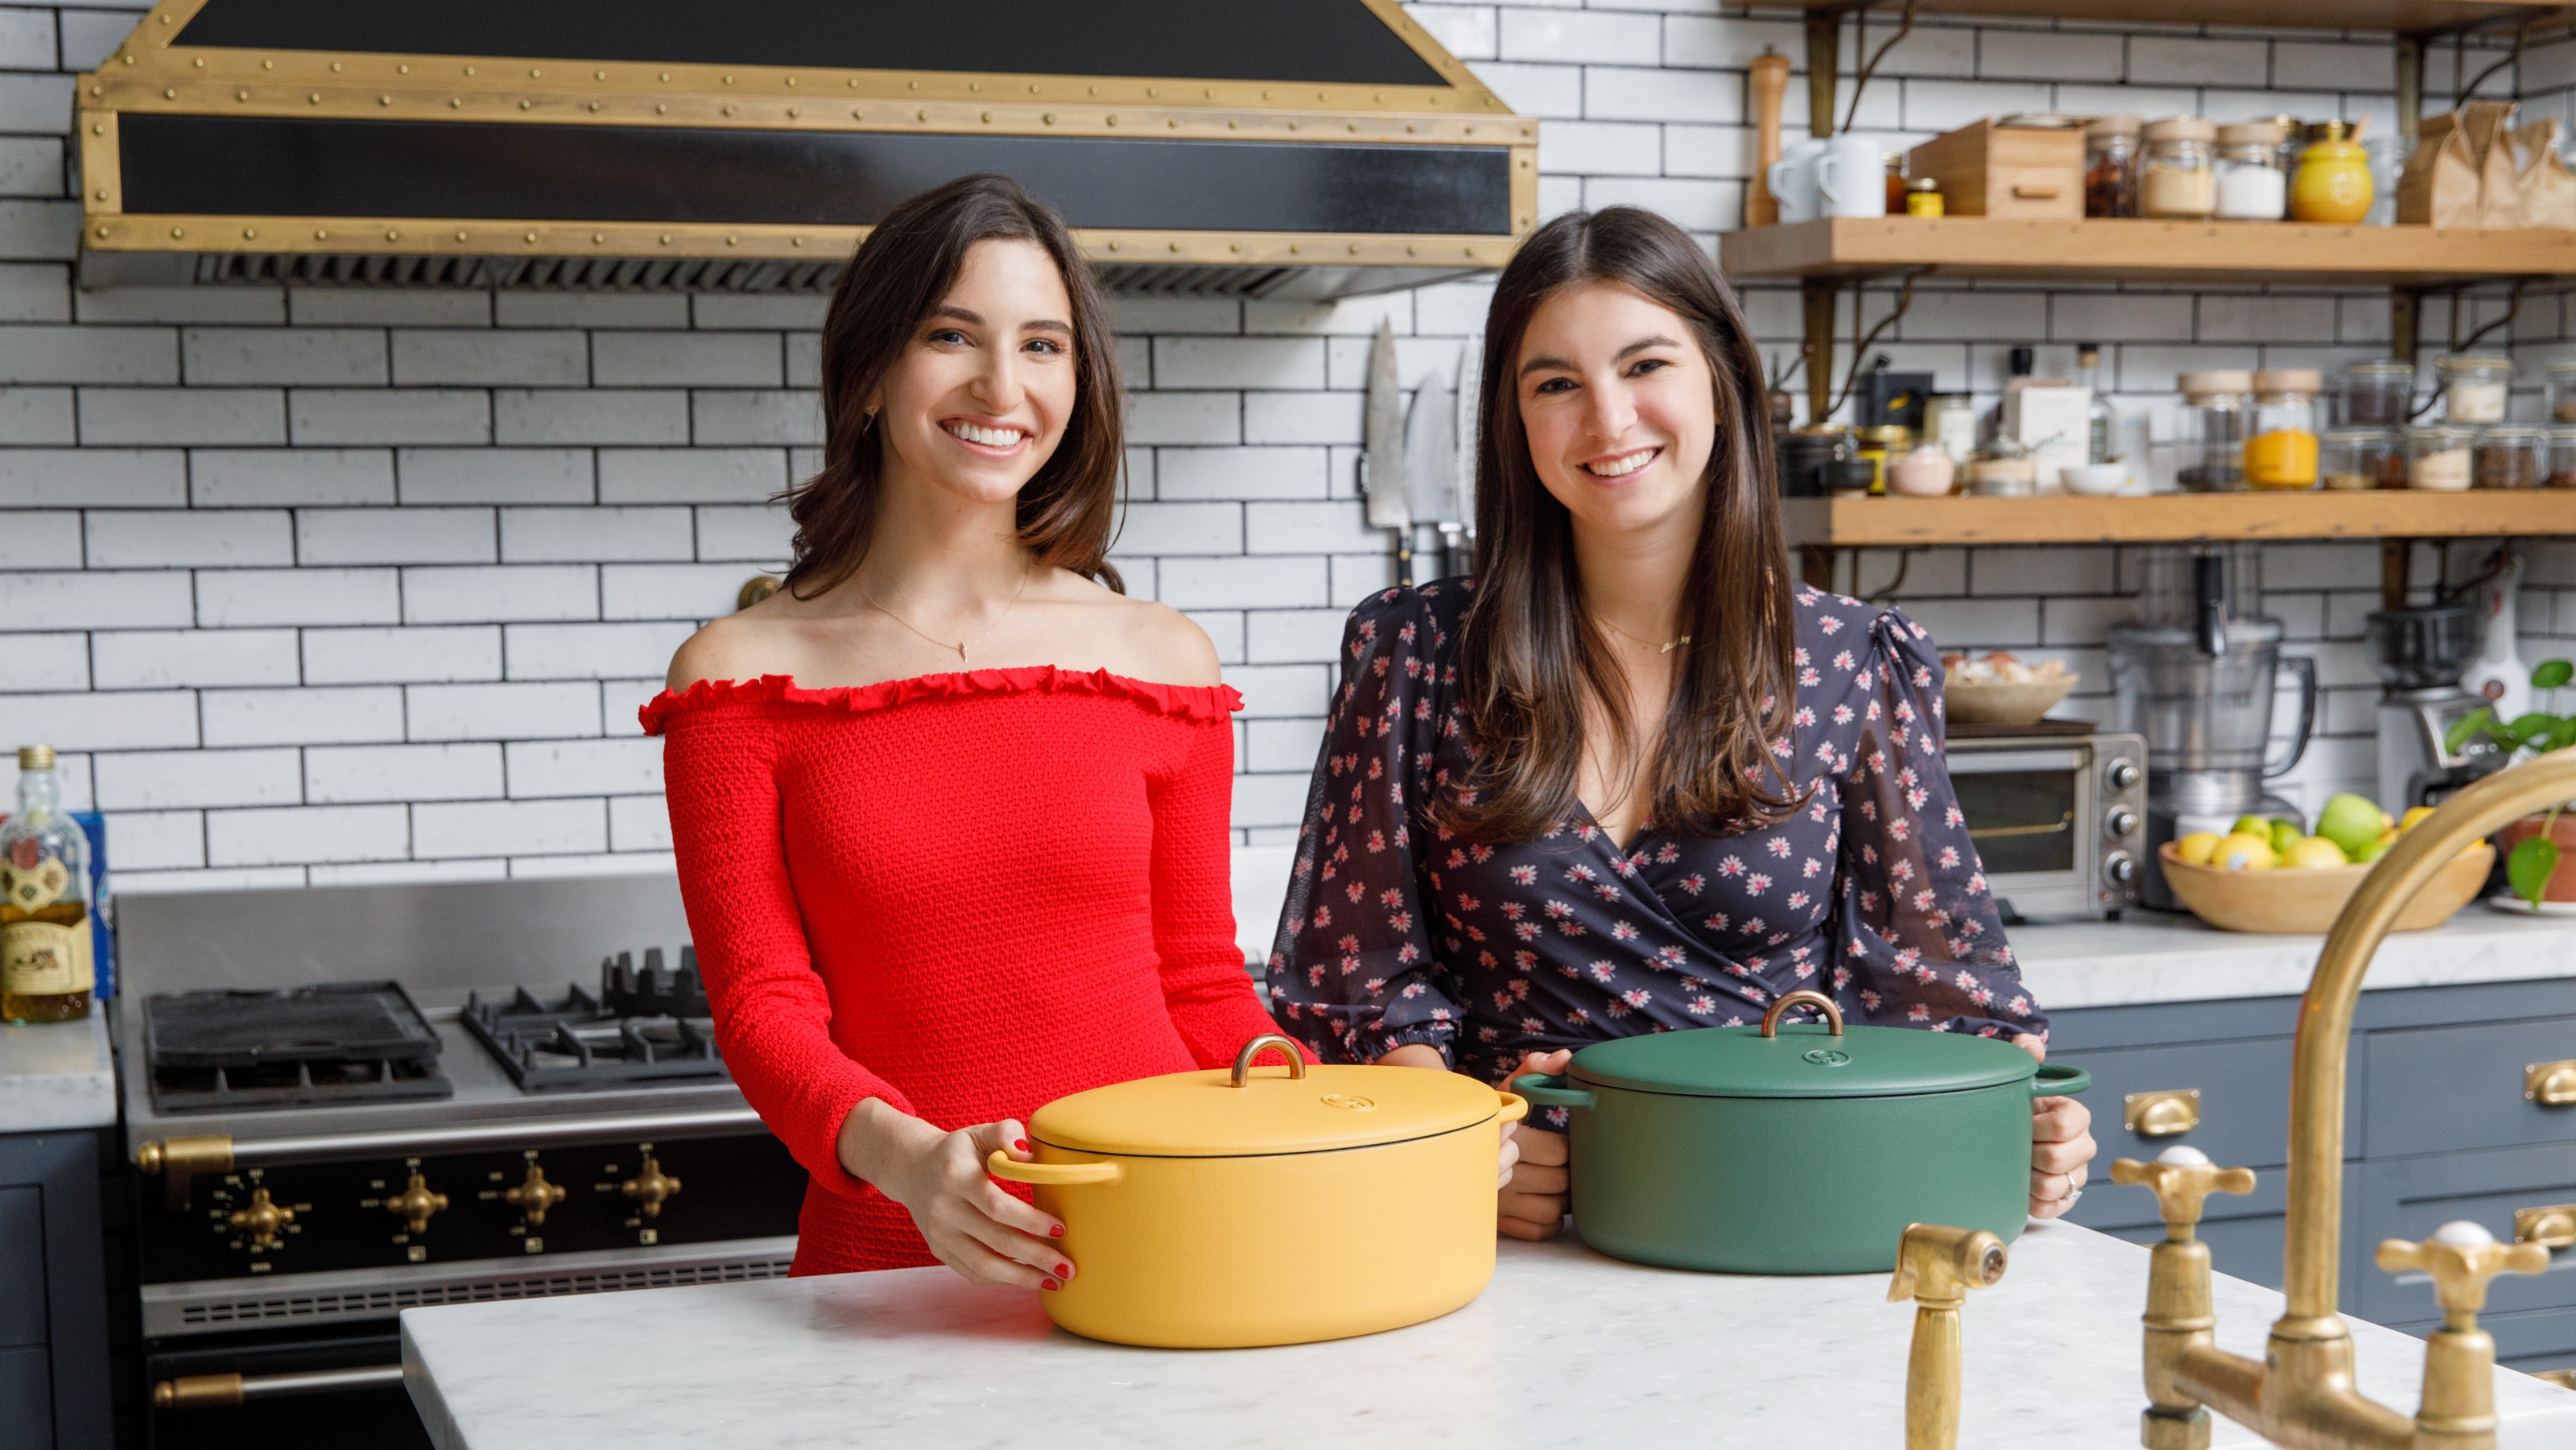 Kitchen Brand Great Jones Just Launched New, Instagram-Worthy Cookware